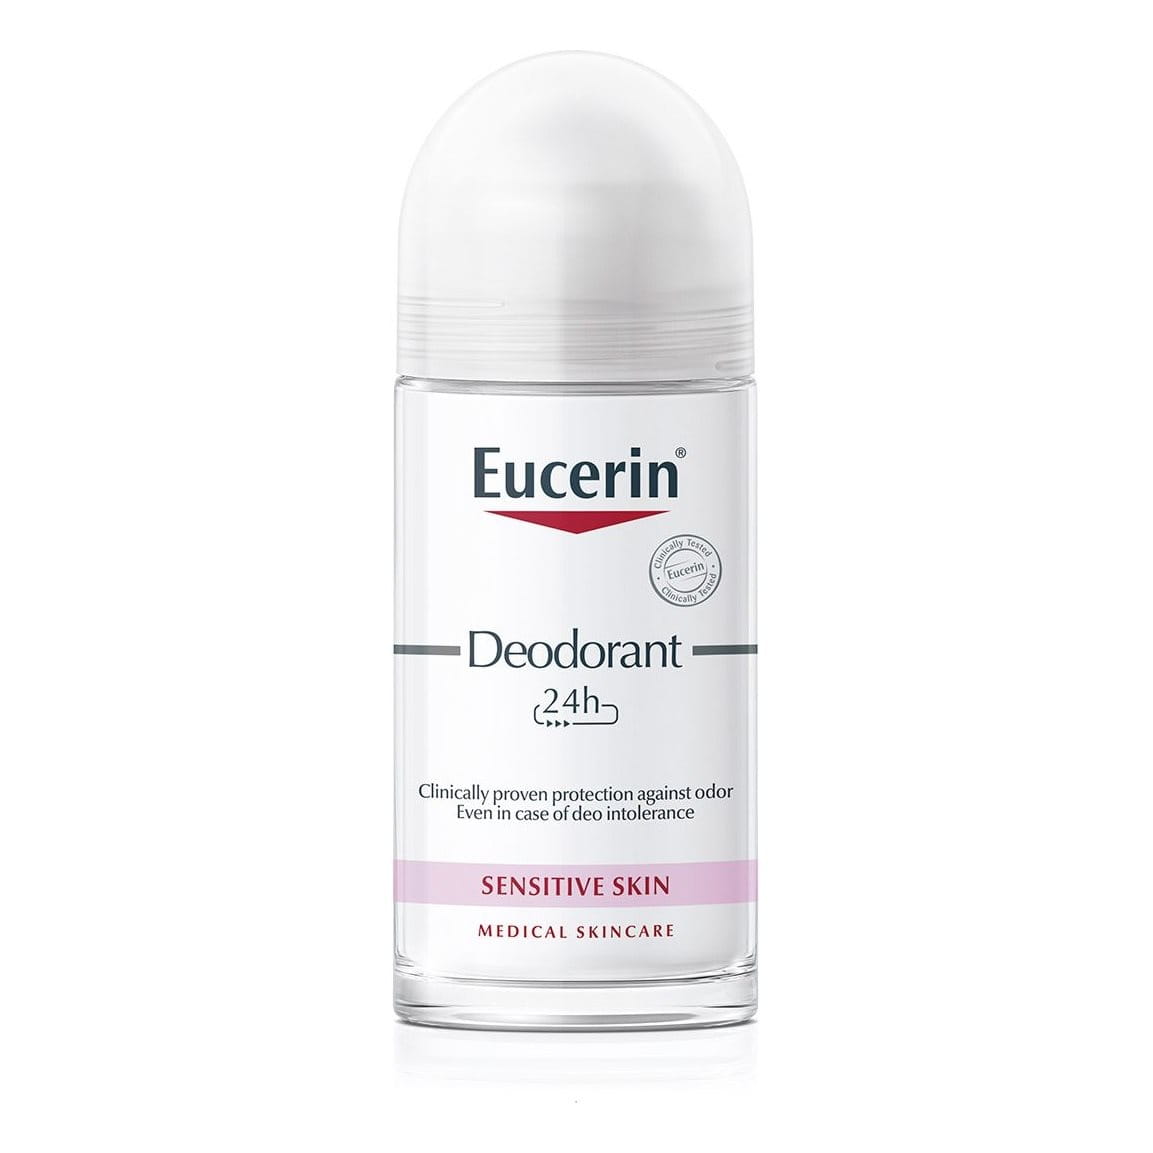 Eucerin 24h Deodorant Sensitive Skin Roll-On